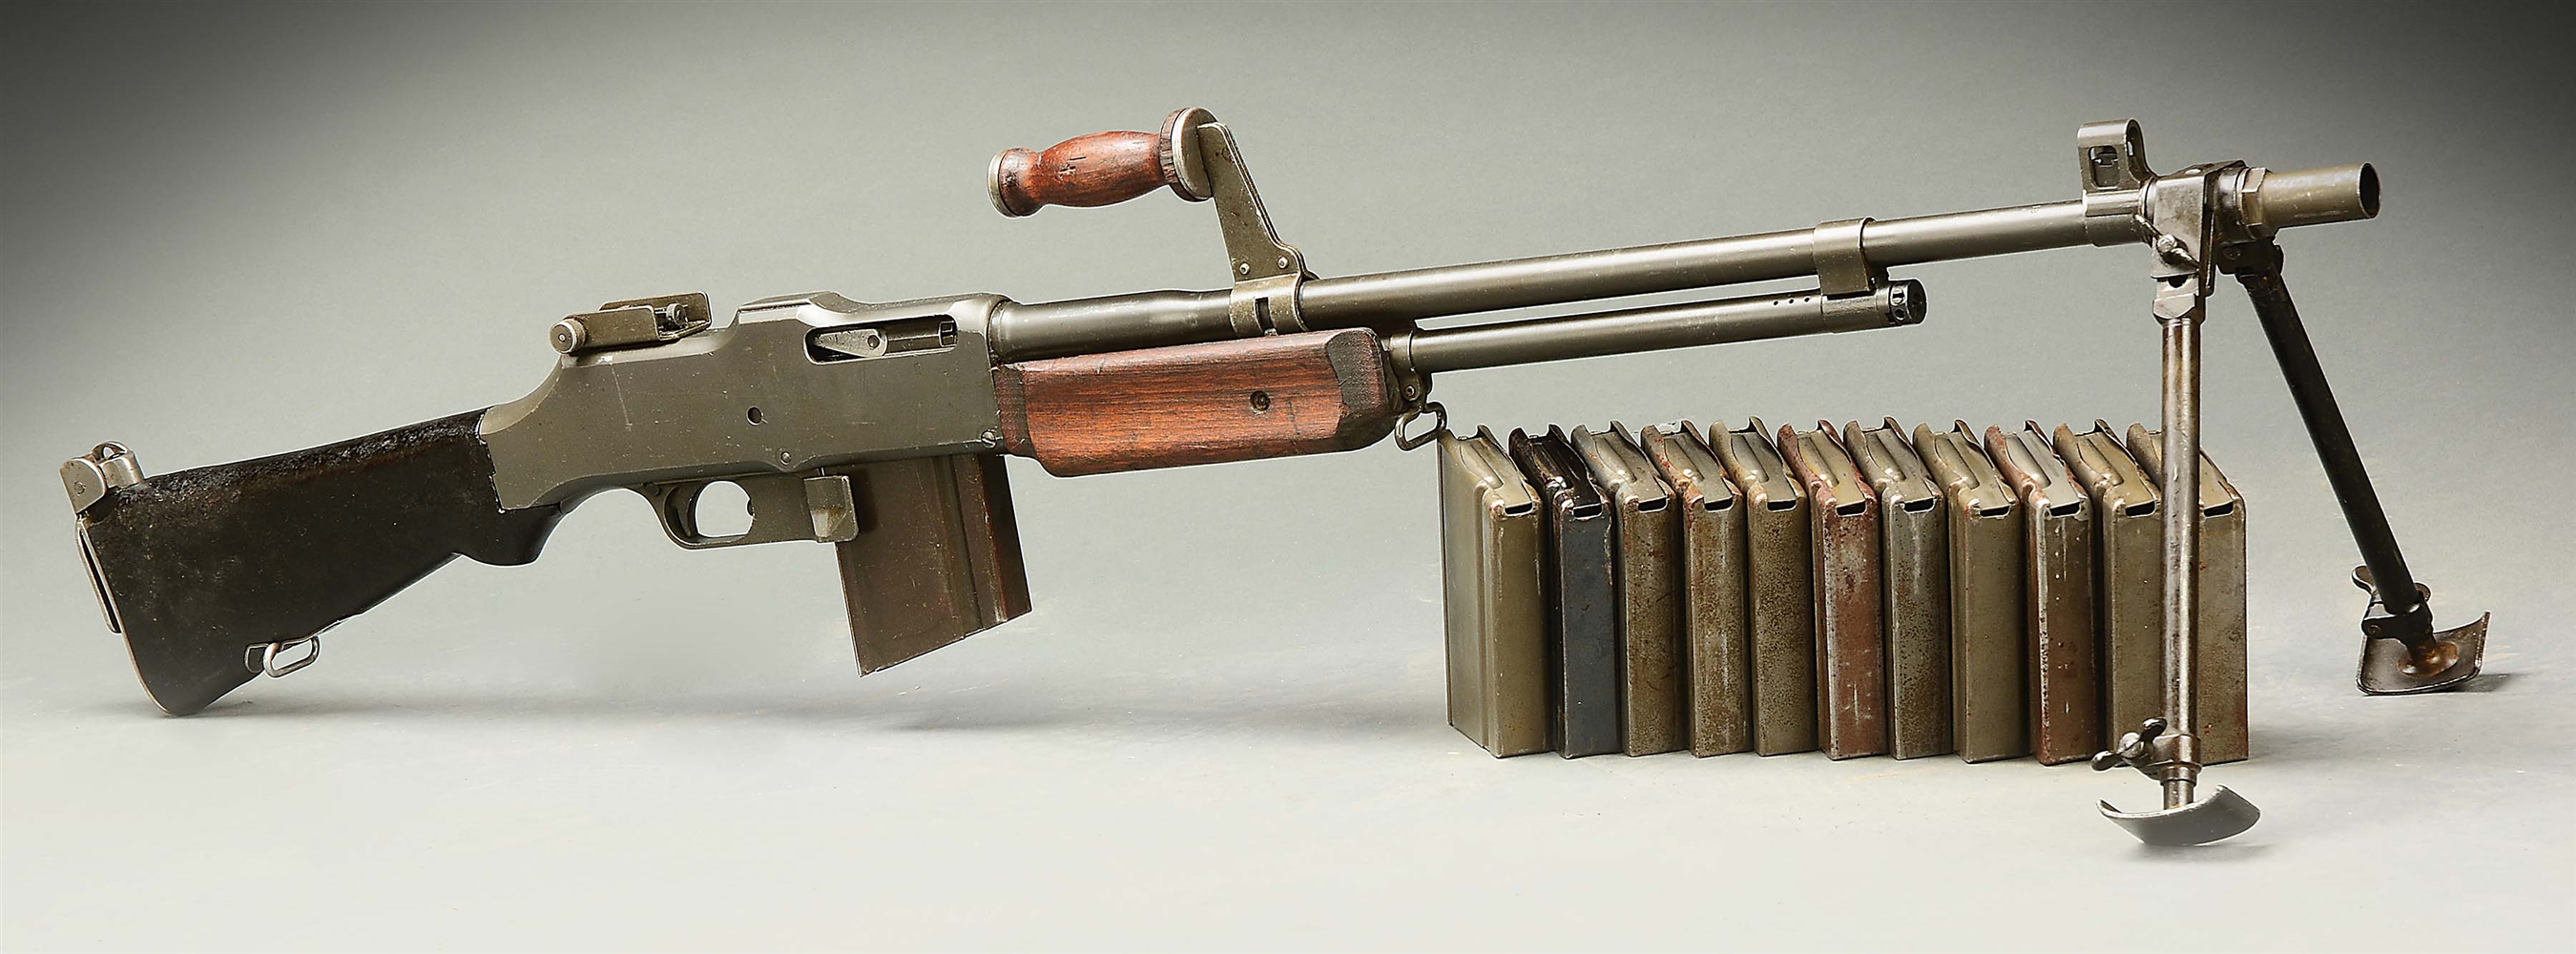 (N) VERY FINE MARLIN ROCKWELL MODEL 1918A2 BROWNING AUTOMATIC RIFLE (B.A.R) MACHINE GUN (PRE-86 DEALER SAMPLE).